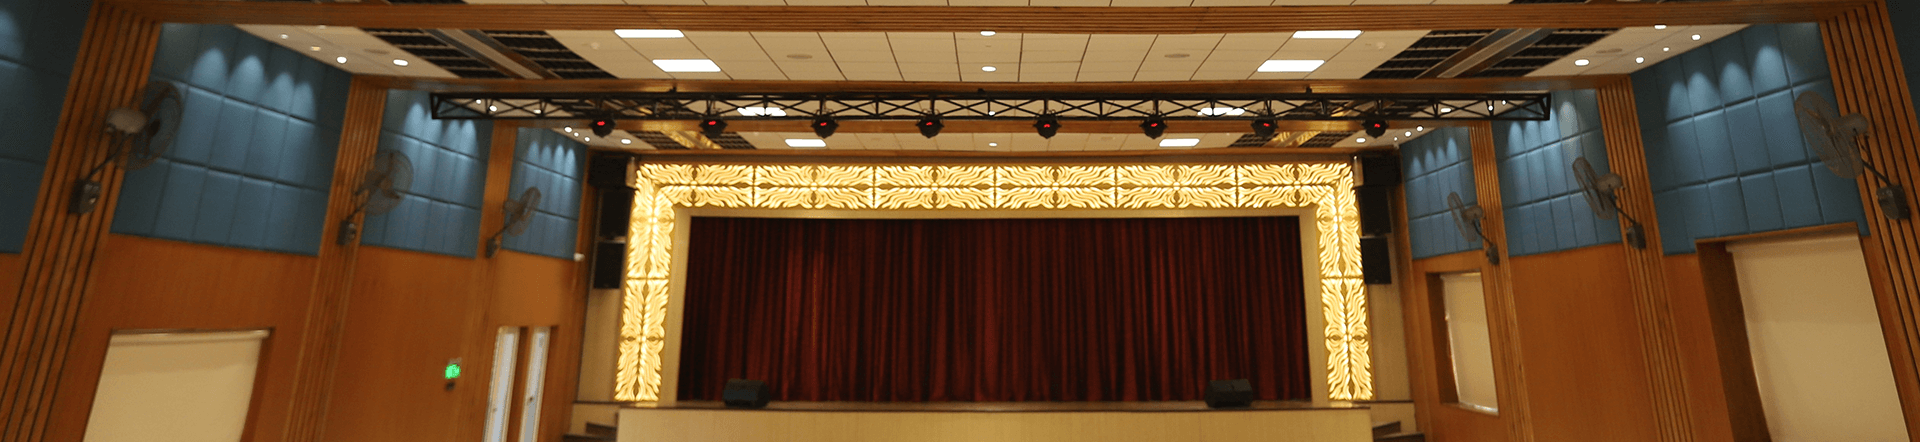 Acoustic Panels in a School Auditorium, Ambala